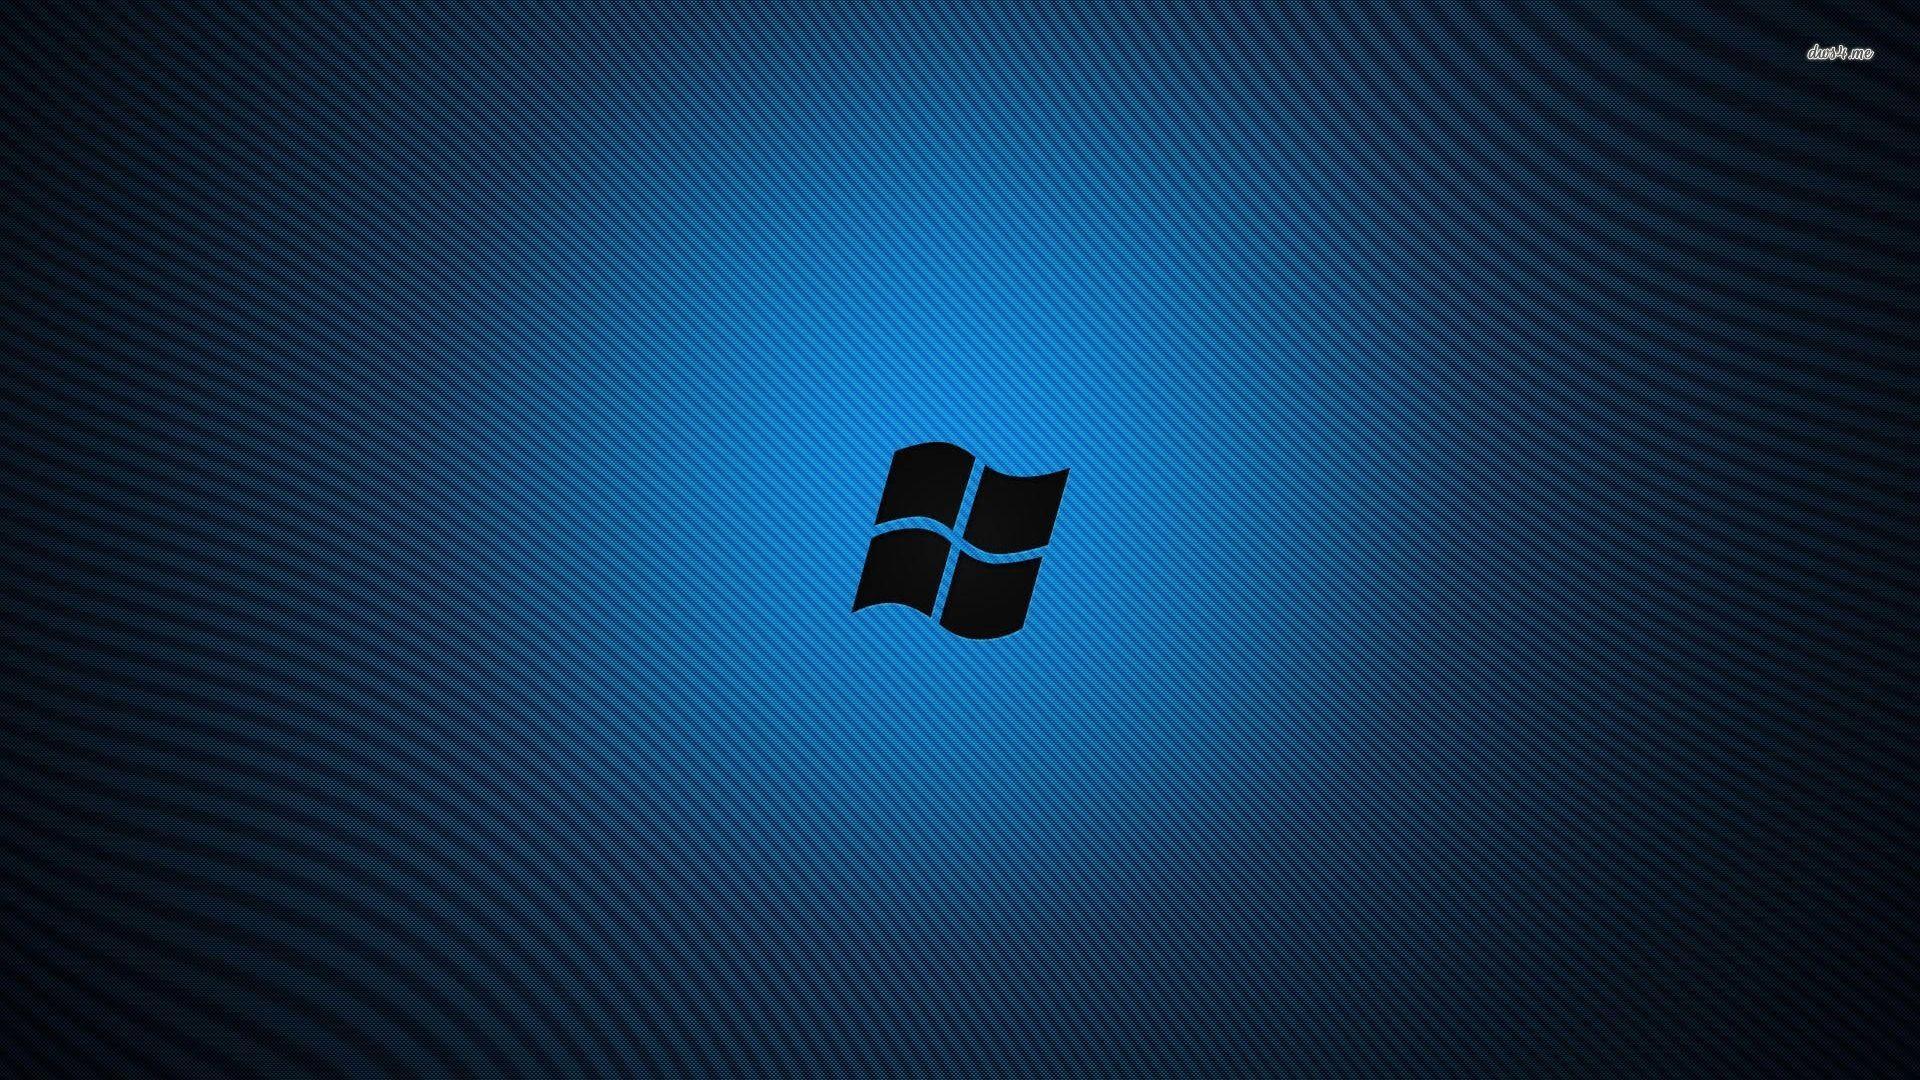 Free Download 3d Windows Logo Wallpapers 1920 X 1080 3d Windows